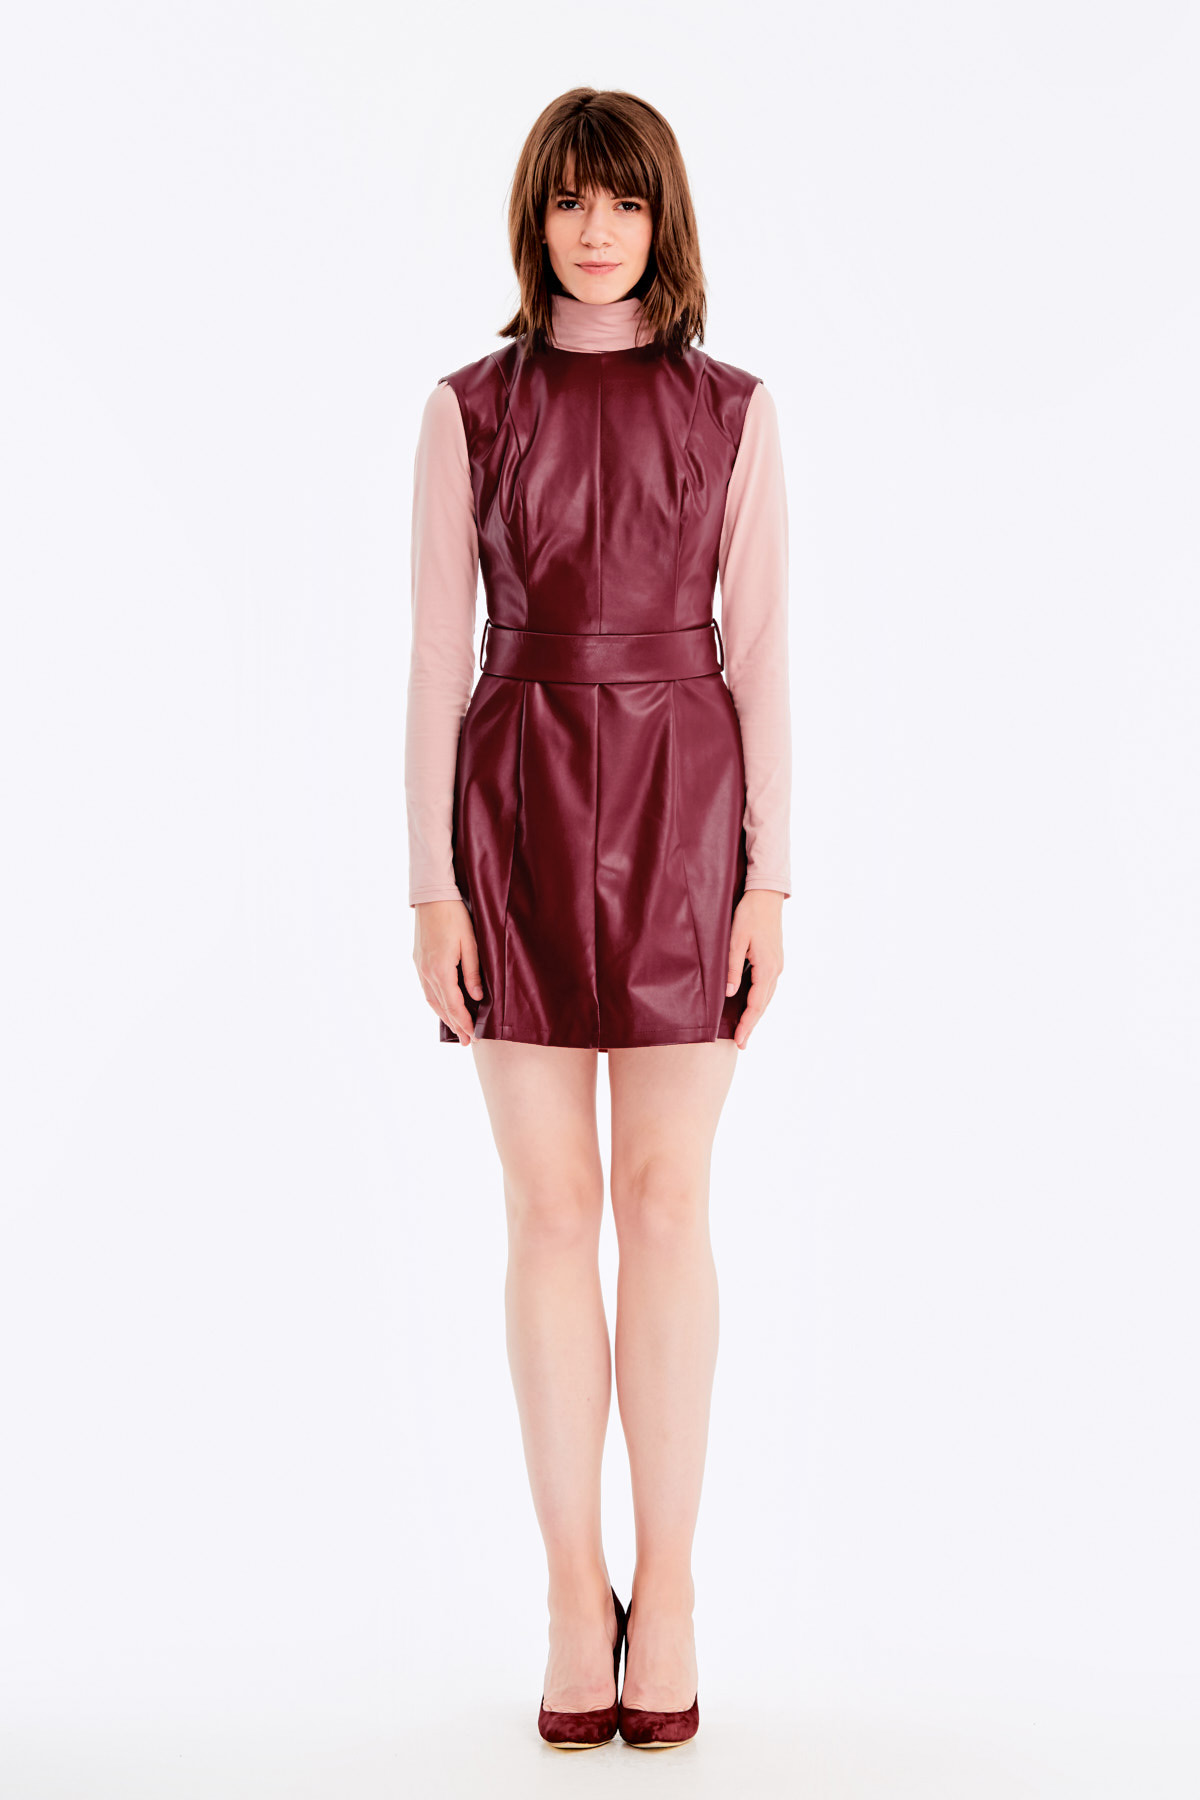 Below-knee burgundy leather dress , photo 10